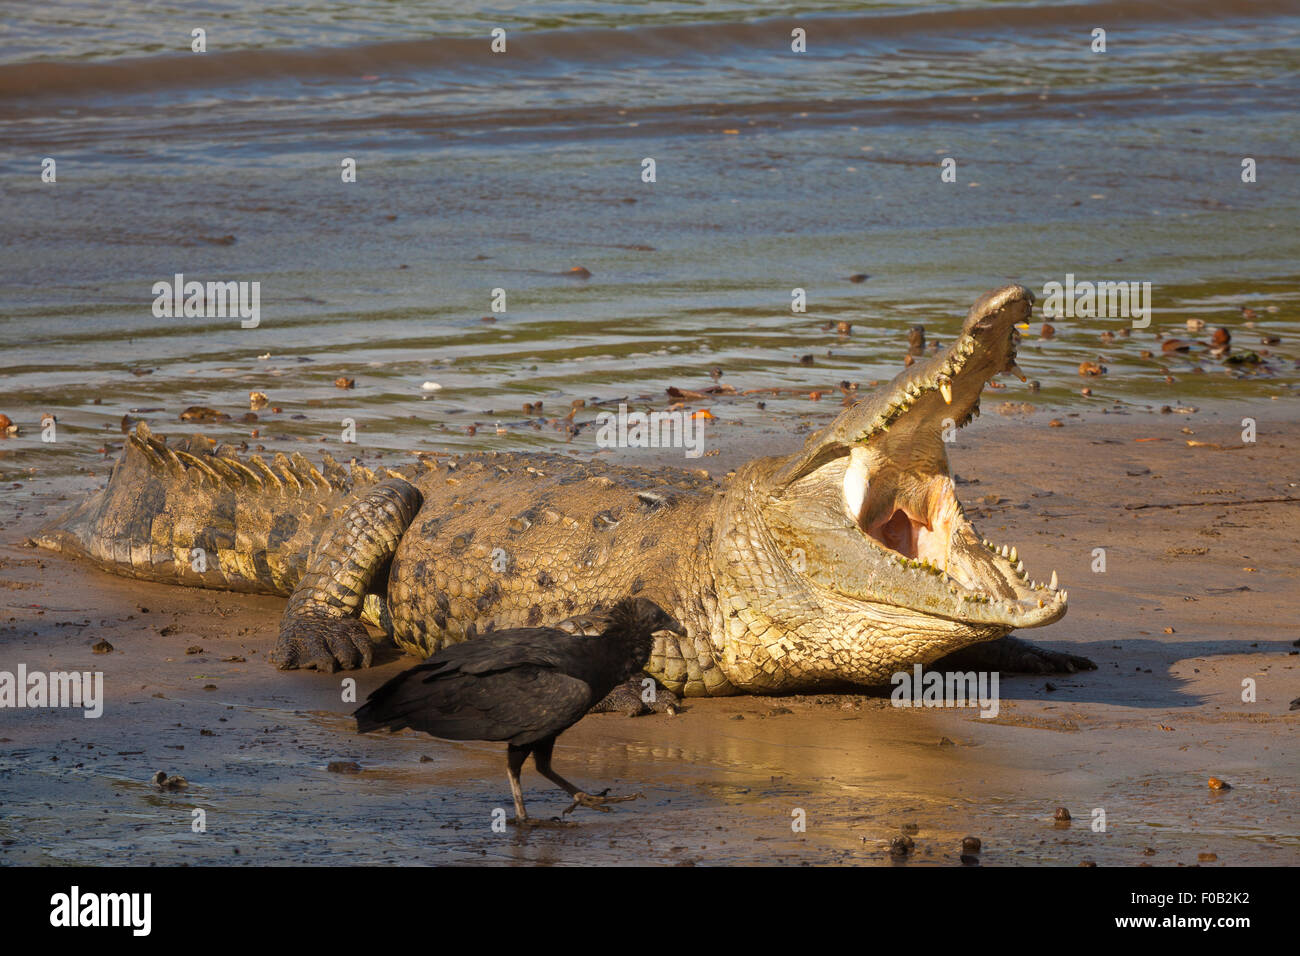 Panama wildlife with an American Crocodile, Crocodylus acutus, at Coiba island national park, Veraguas province, Pacific coast, Republic of Panama. Stock Photo